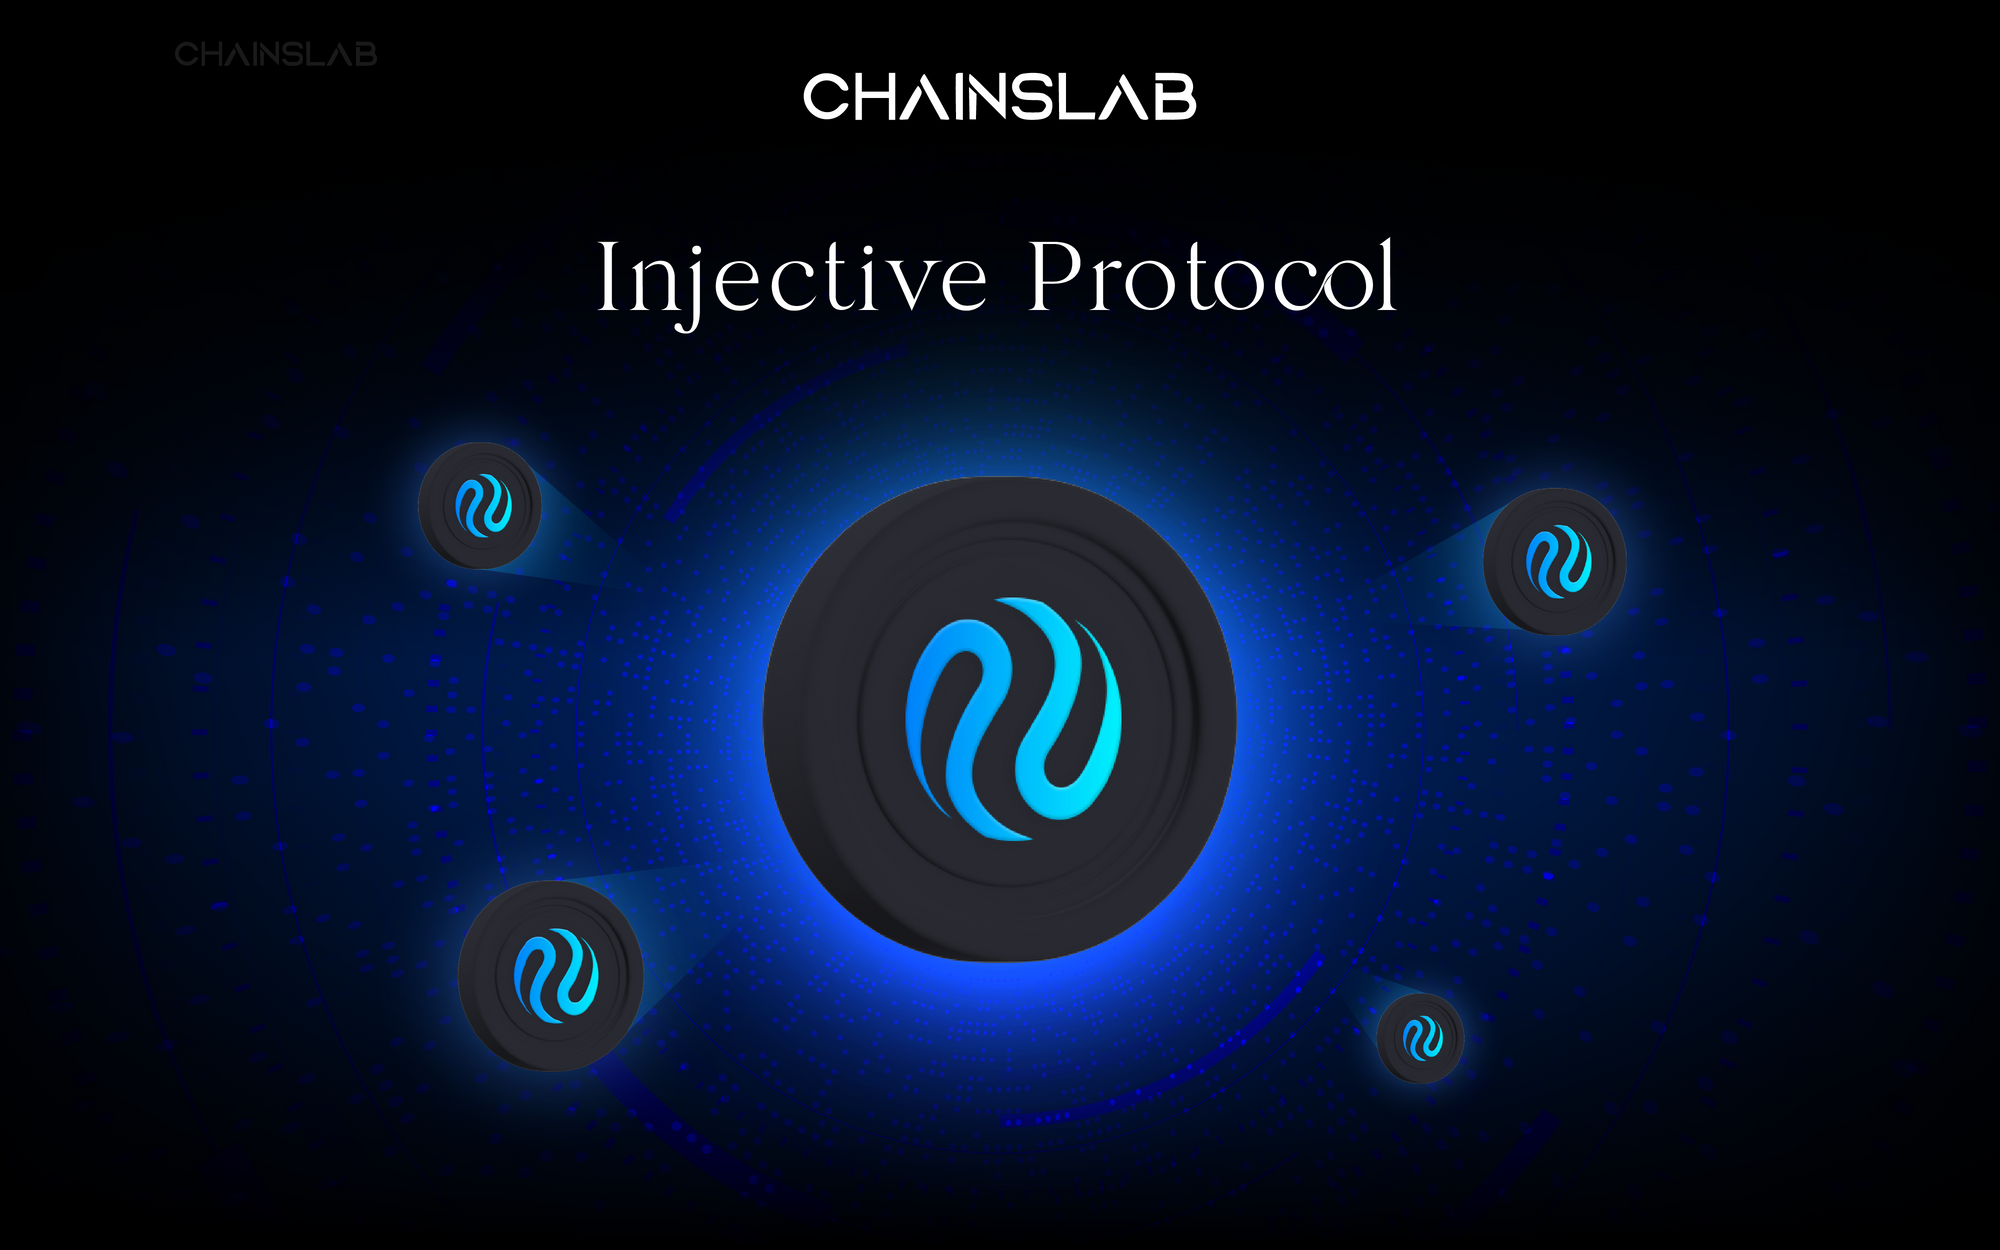 Injective Protocol (INJ)